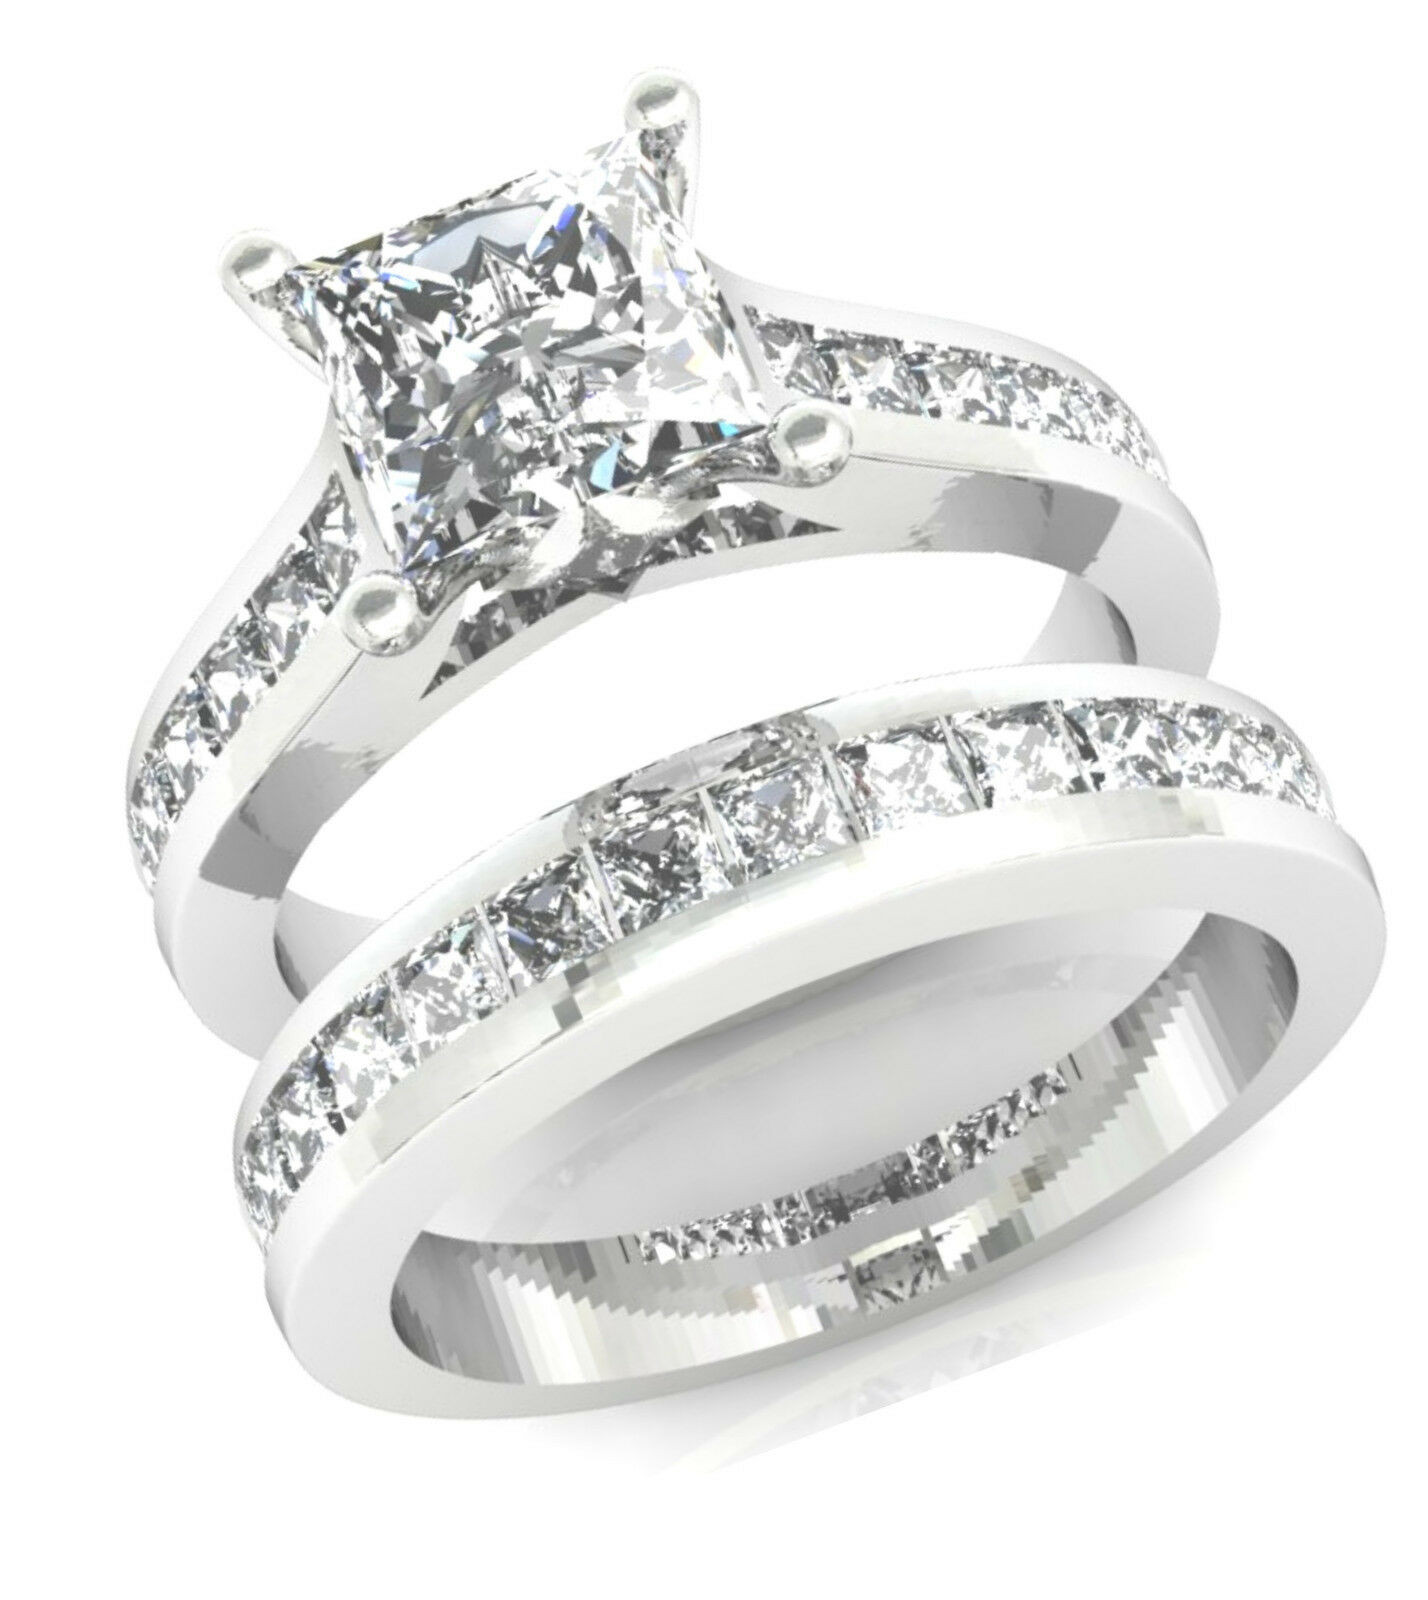 Engagement Ring Princess Cut
 3 2CT PRINCESS CUT CHANNEL SET ENGAGEMENT RING WEDDING